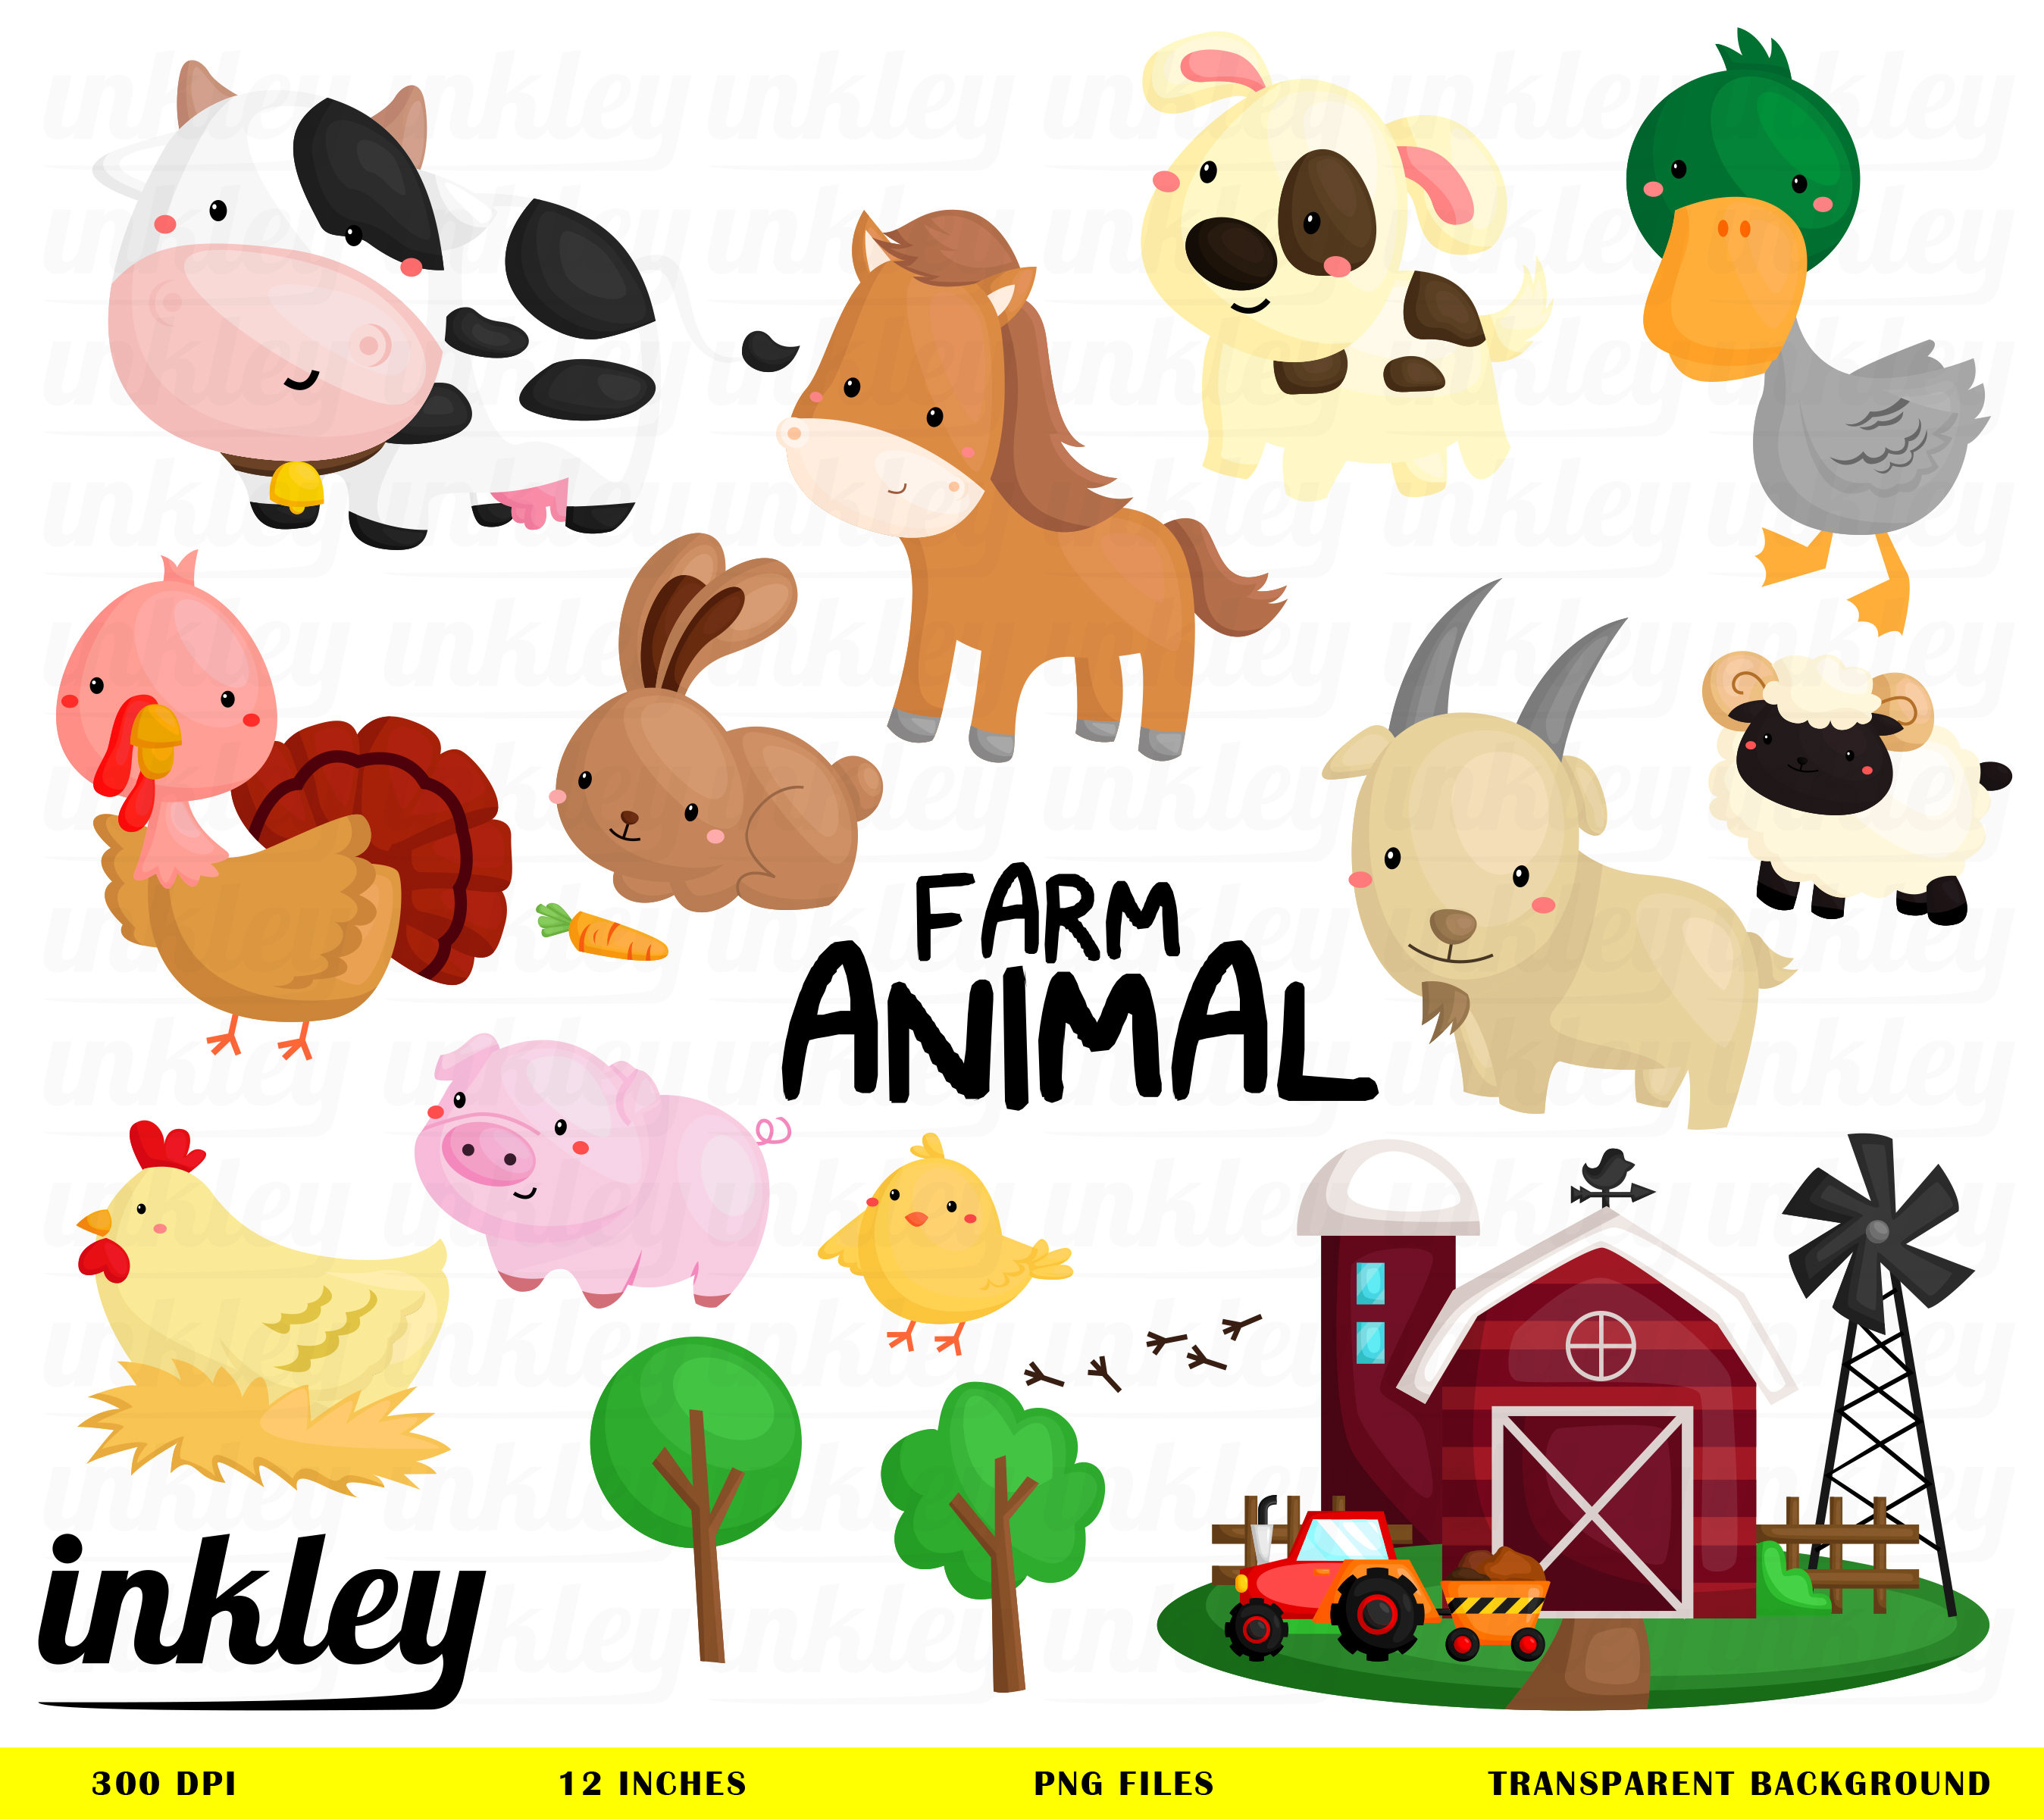 Printable Farm Animals Clipart - Printable Templates